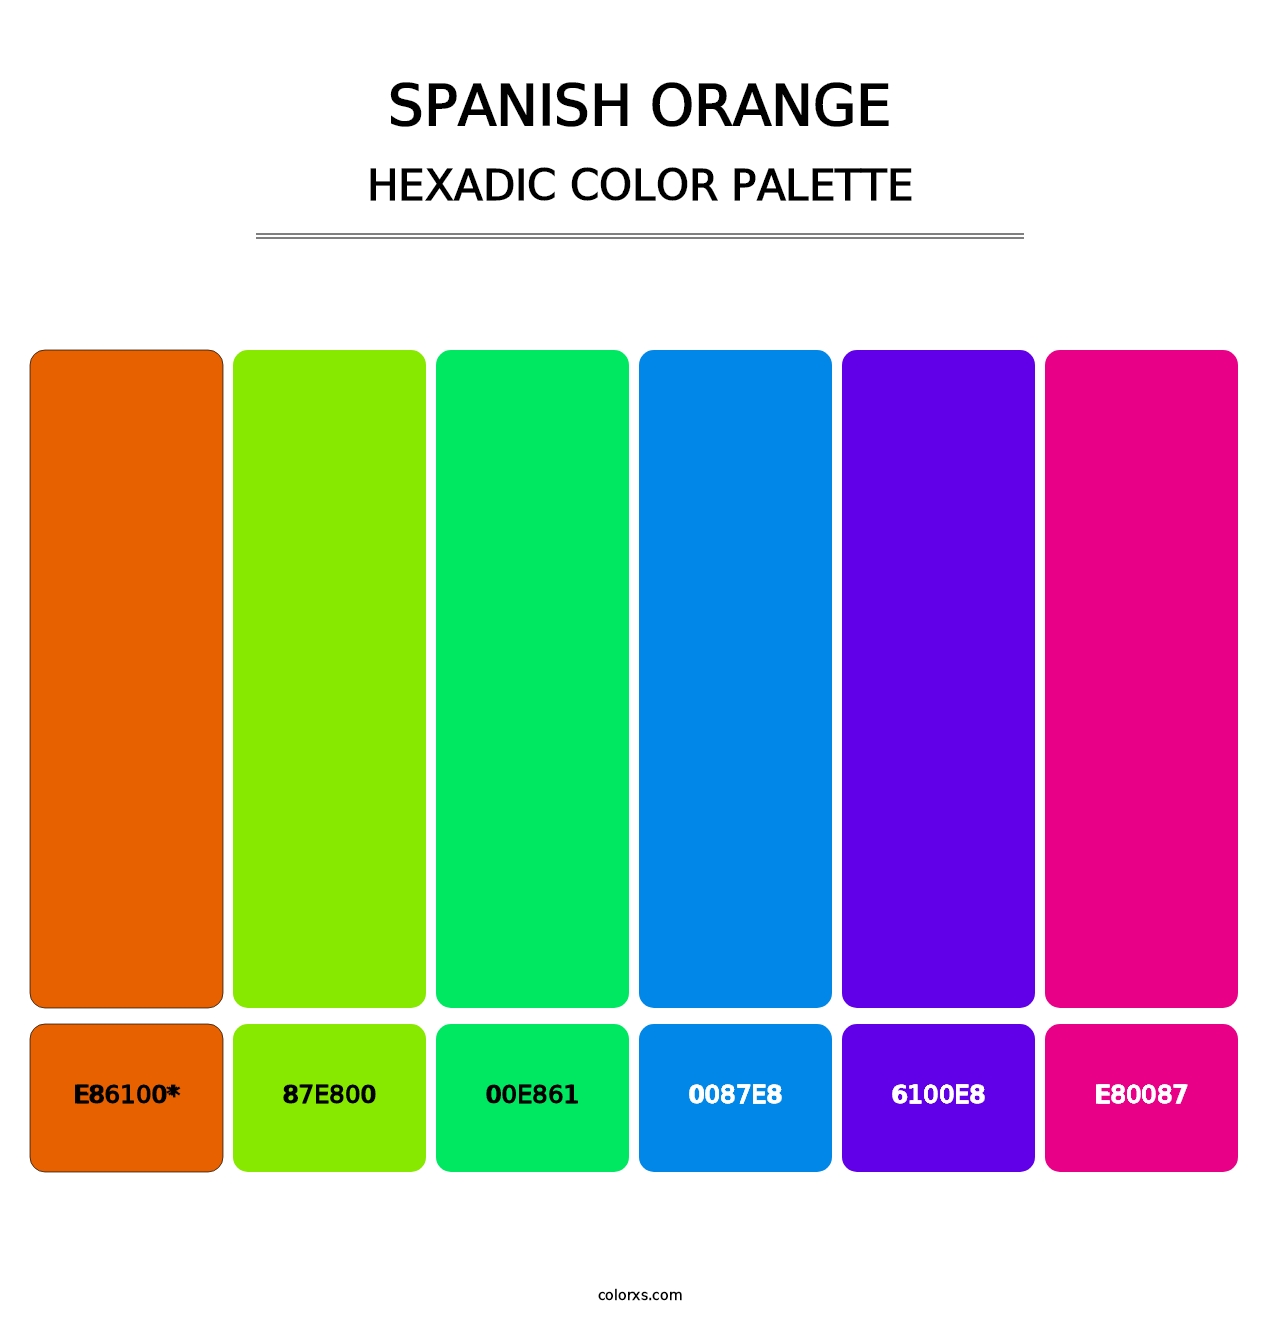 Spanish Orange - Hexadic Color Palette